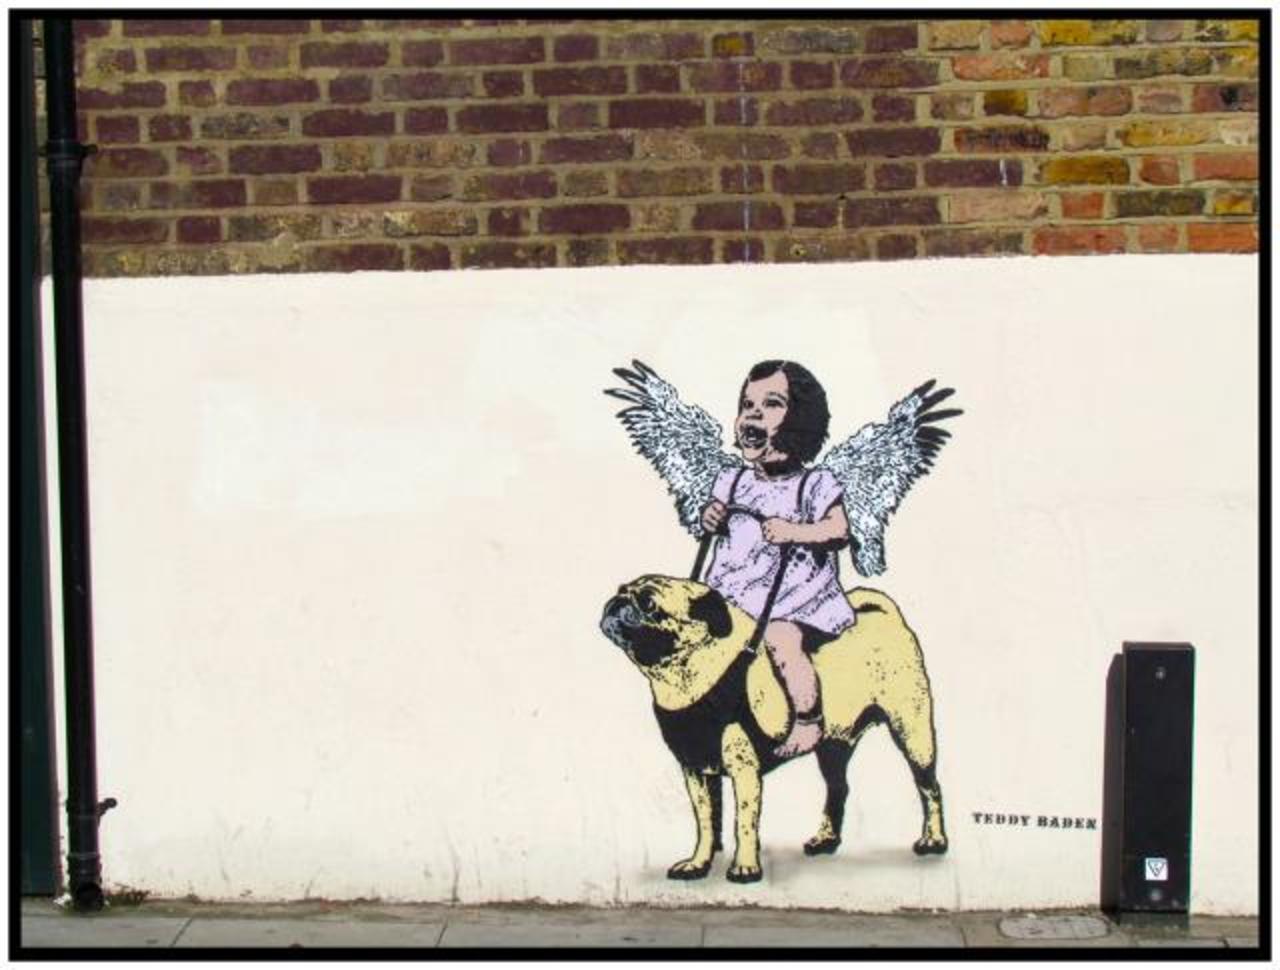 RT @niumestreetart: Pugs might fly'.. see more of Teddy Baden here: http://bit.ly/1vyD8s1 #streetart #graffiti http://t.co/u3dHVGZdG4